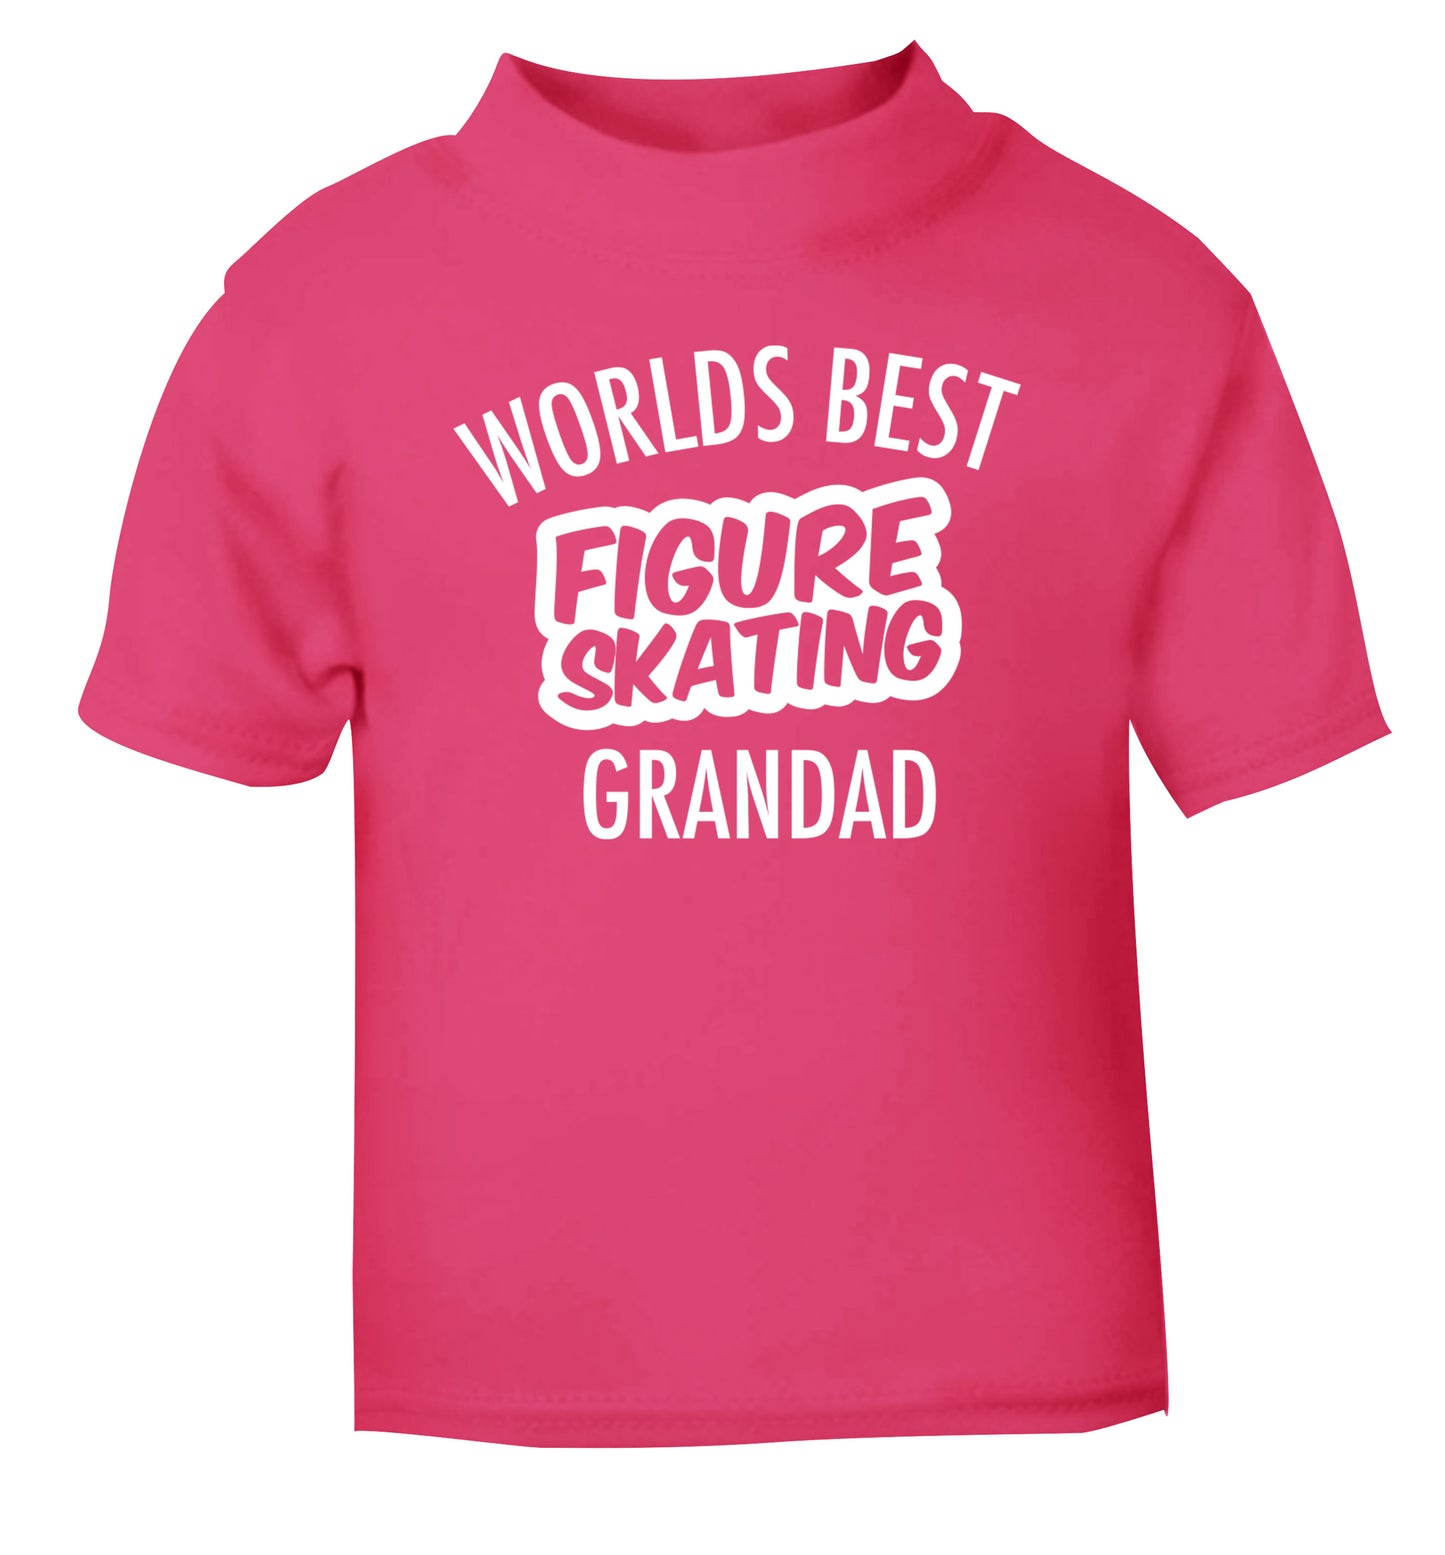 Worlds best figure skating grandad pink Baby Toddler Tshirt 2 Years